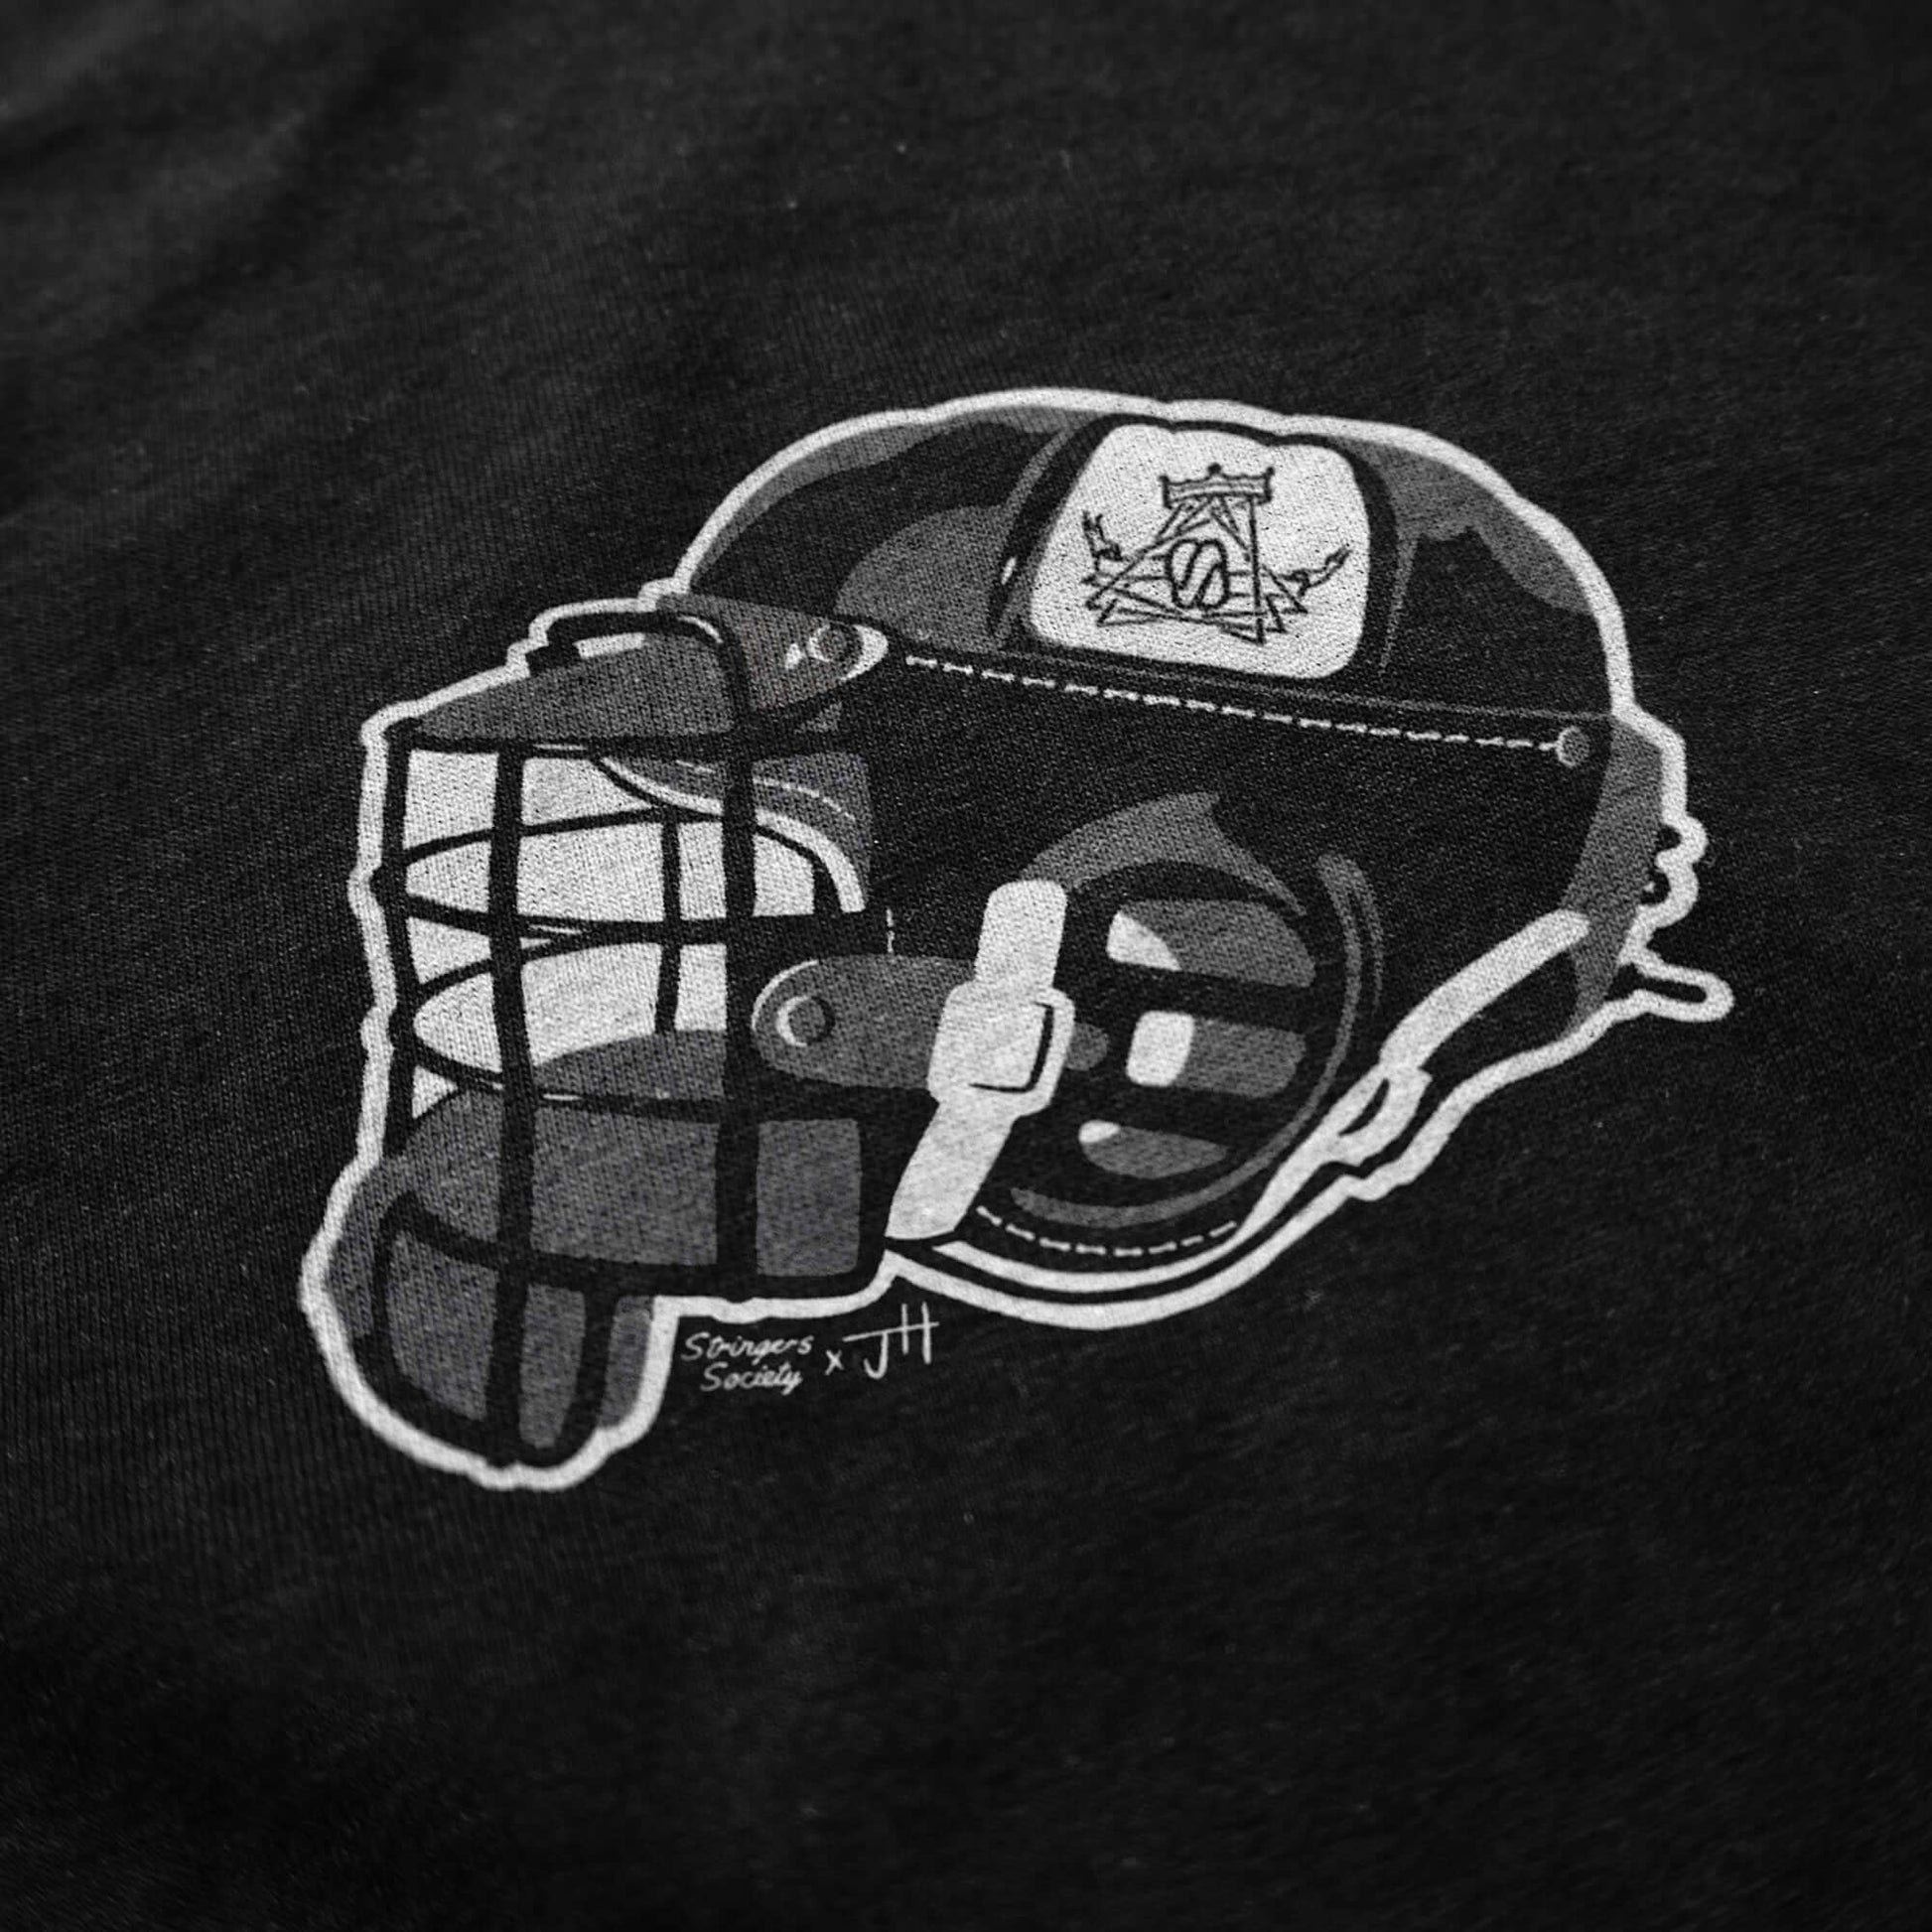 Performance Vintage Lacrosse Helmet Shirt